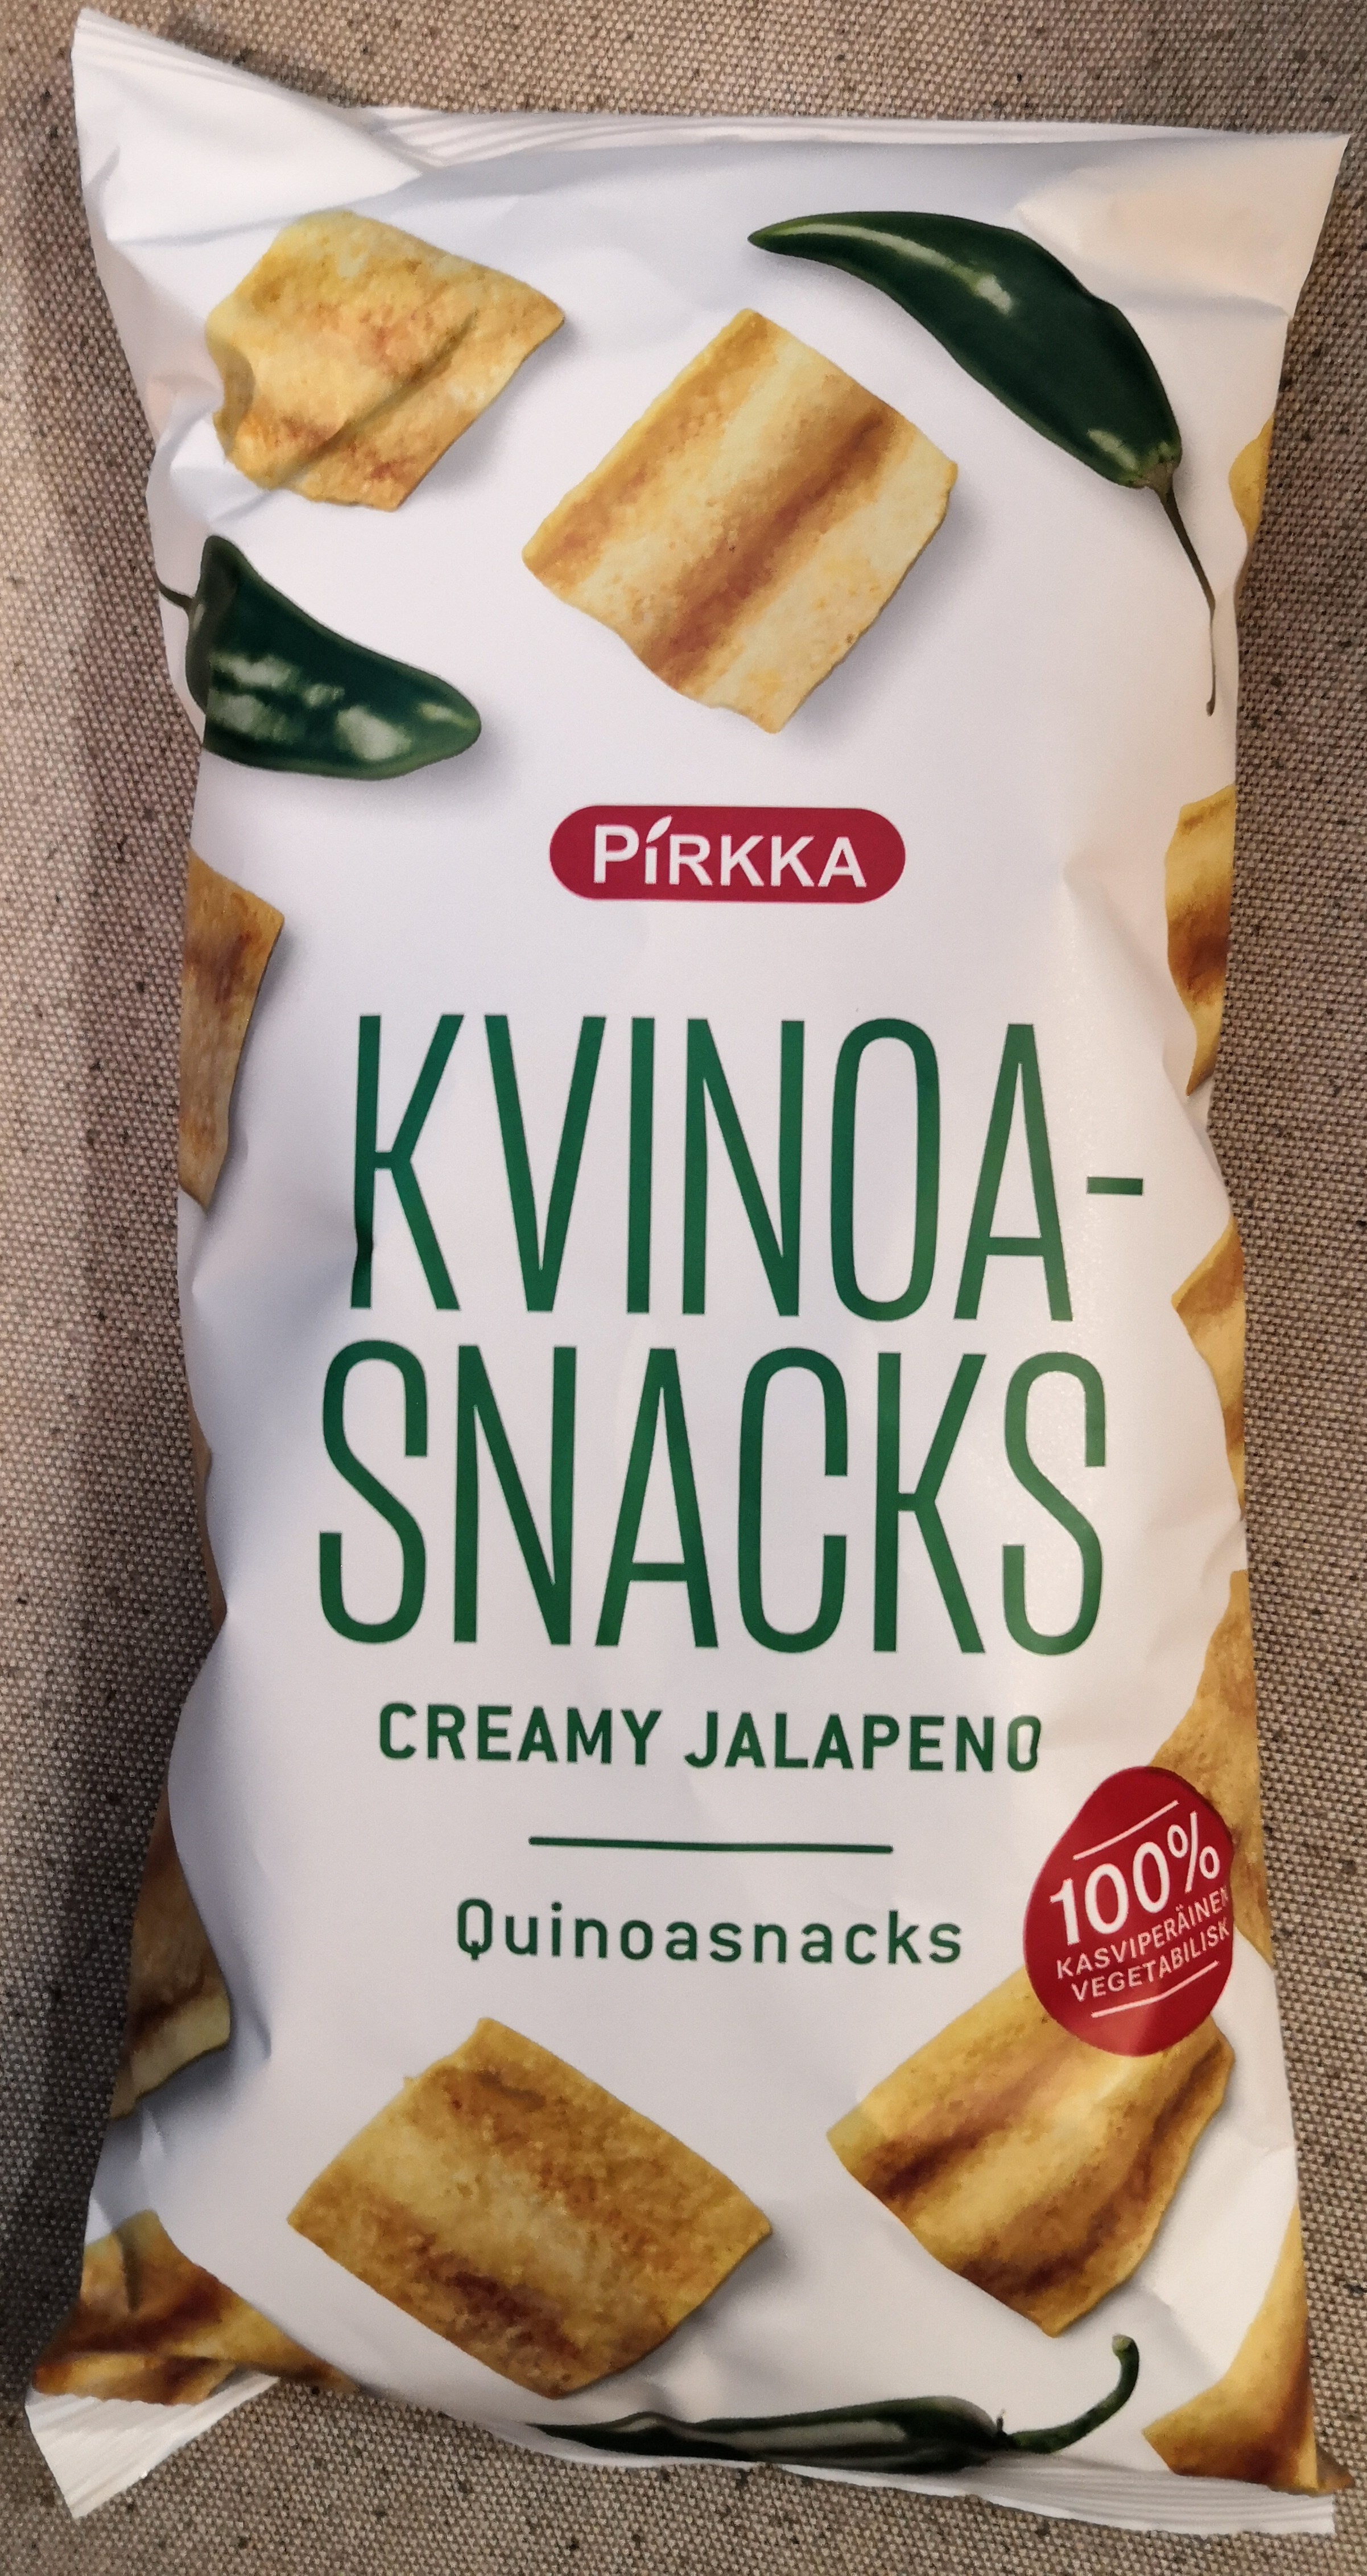 Kvinoa-snacks creamy jalapeno - Tuote